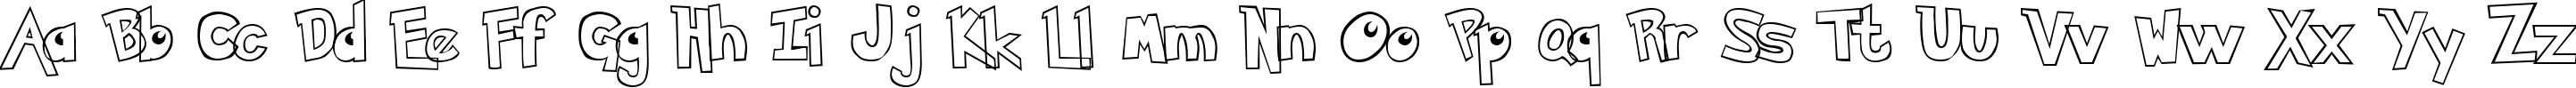 Пример написания английского алфавита шрифтом Pokemon  Hollow